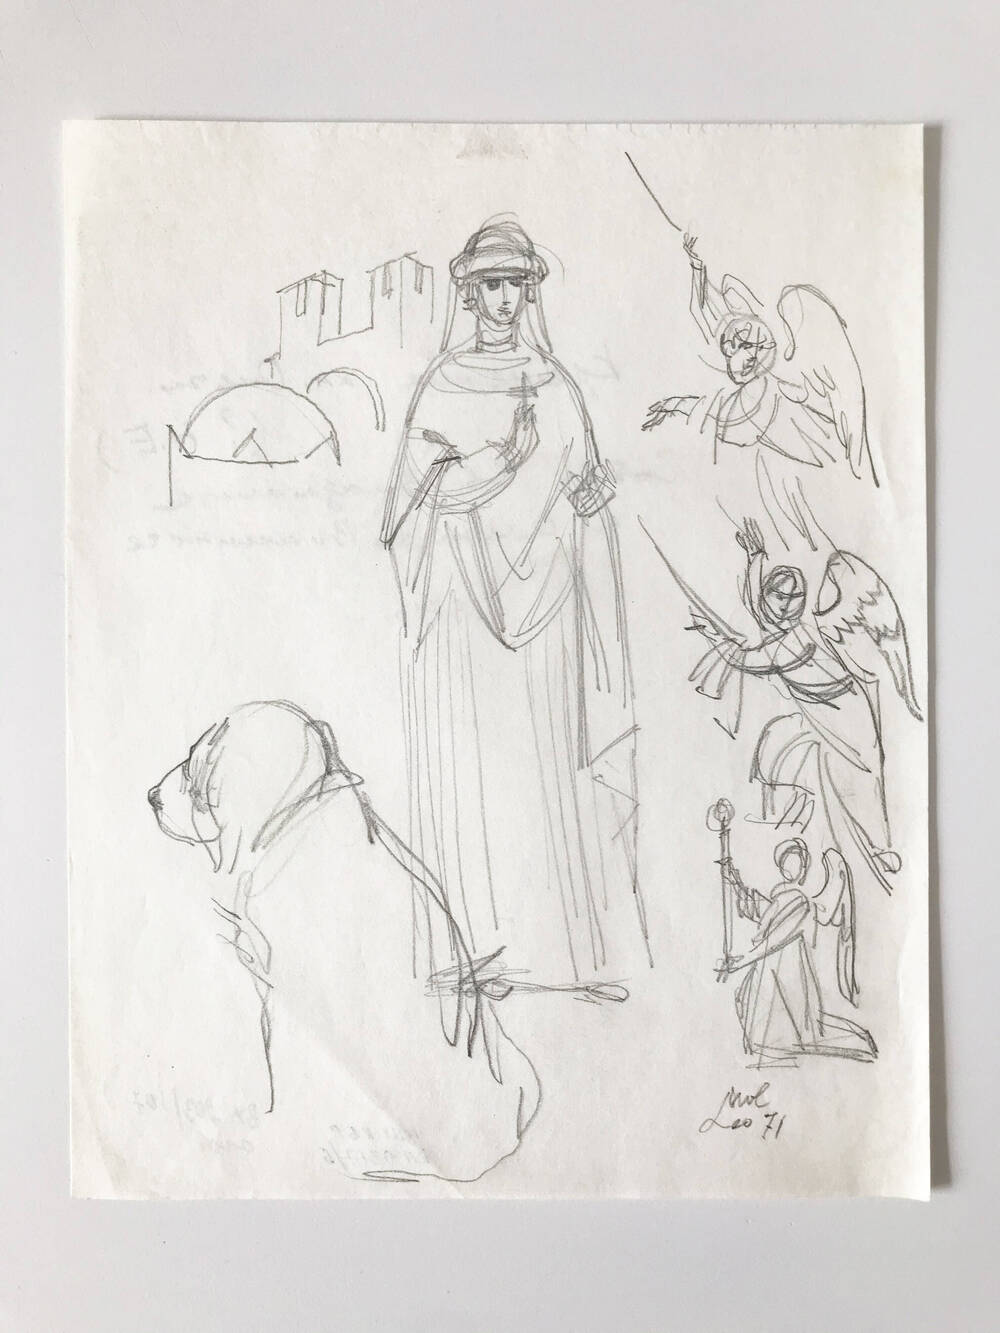 Рисунок карандашом из коллекции скульптора Леонида Молодоженина.